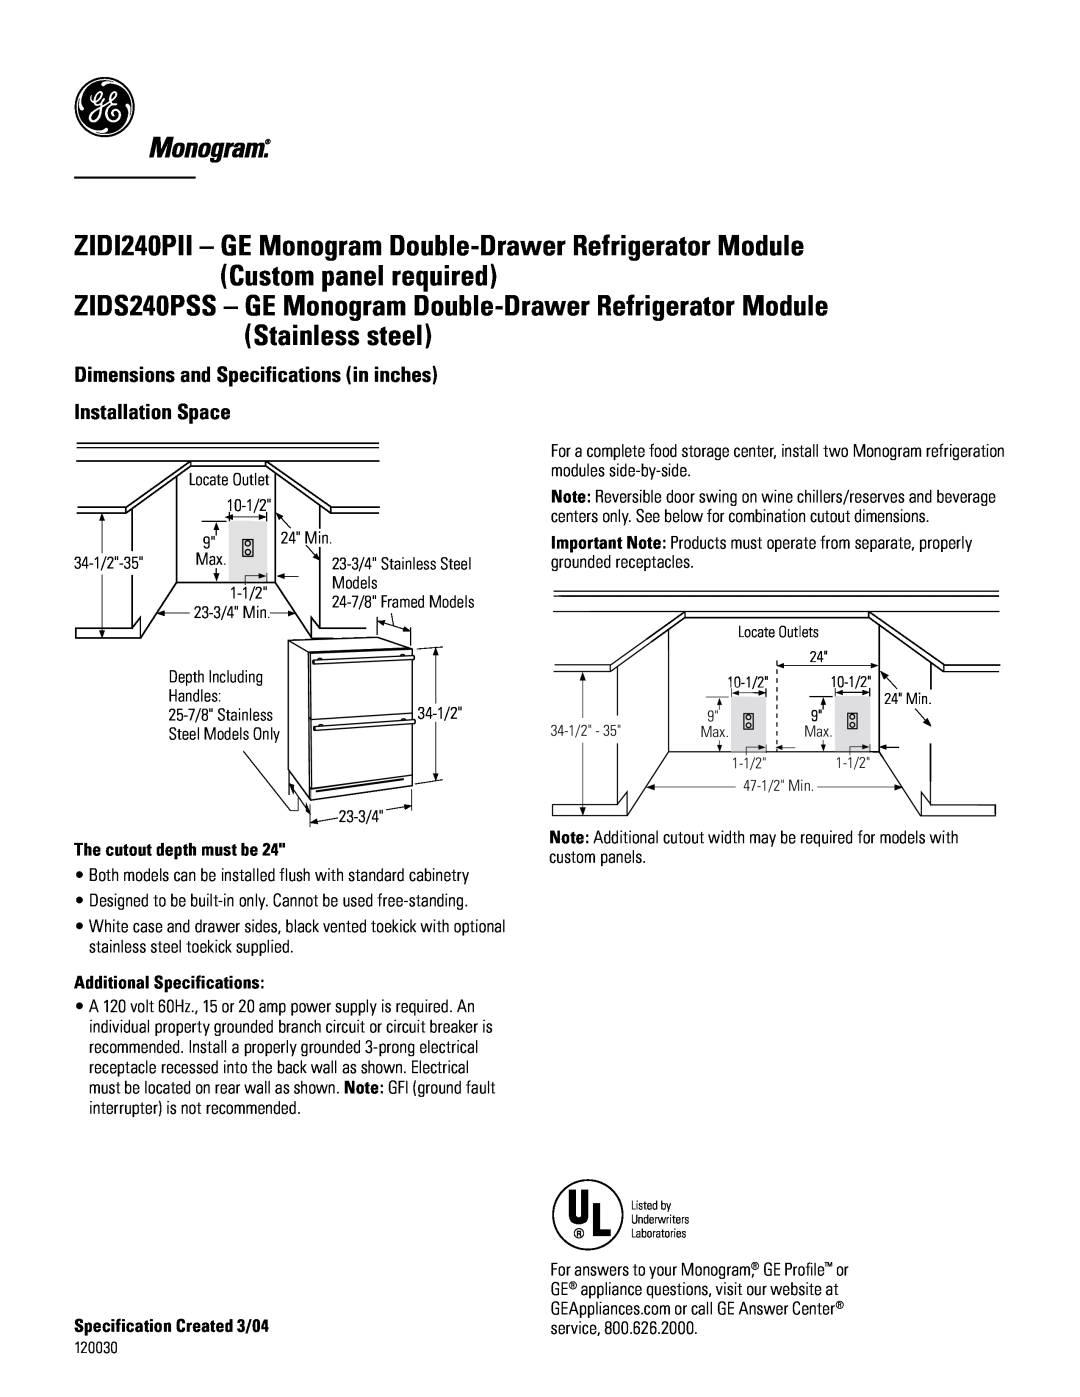 GE ZIDS240PSS dimensions ZIDI240PII - GE Monogram Double-Drawer Refrigerator Module, Custom panel required 